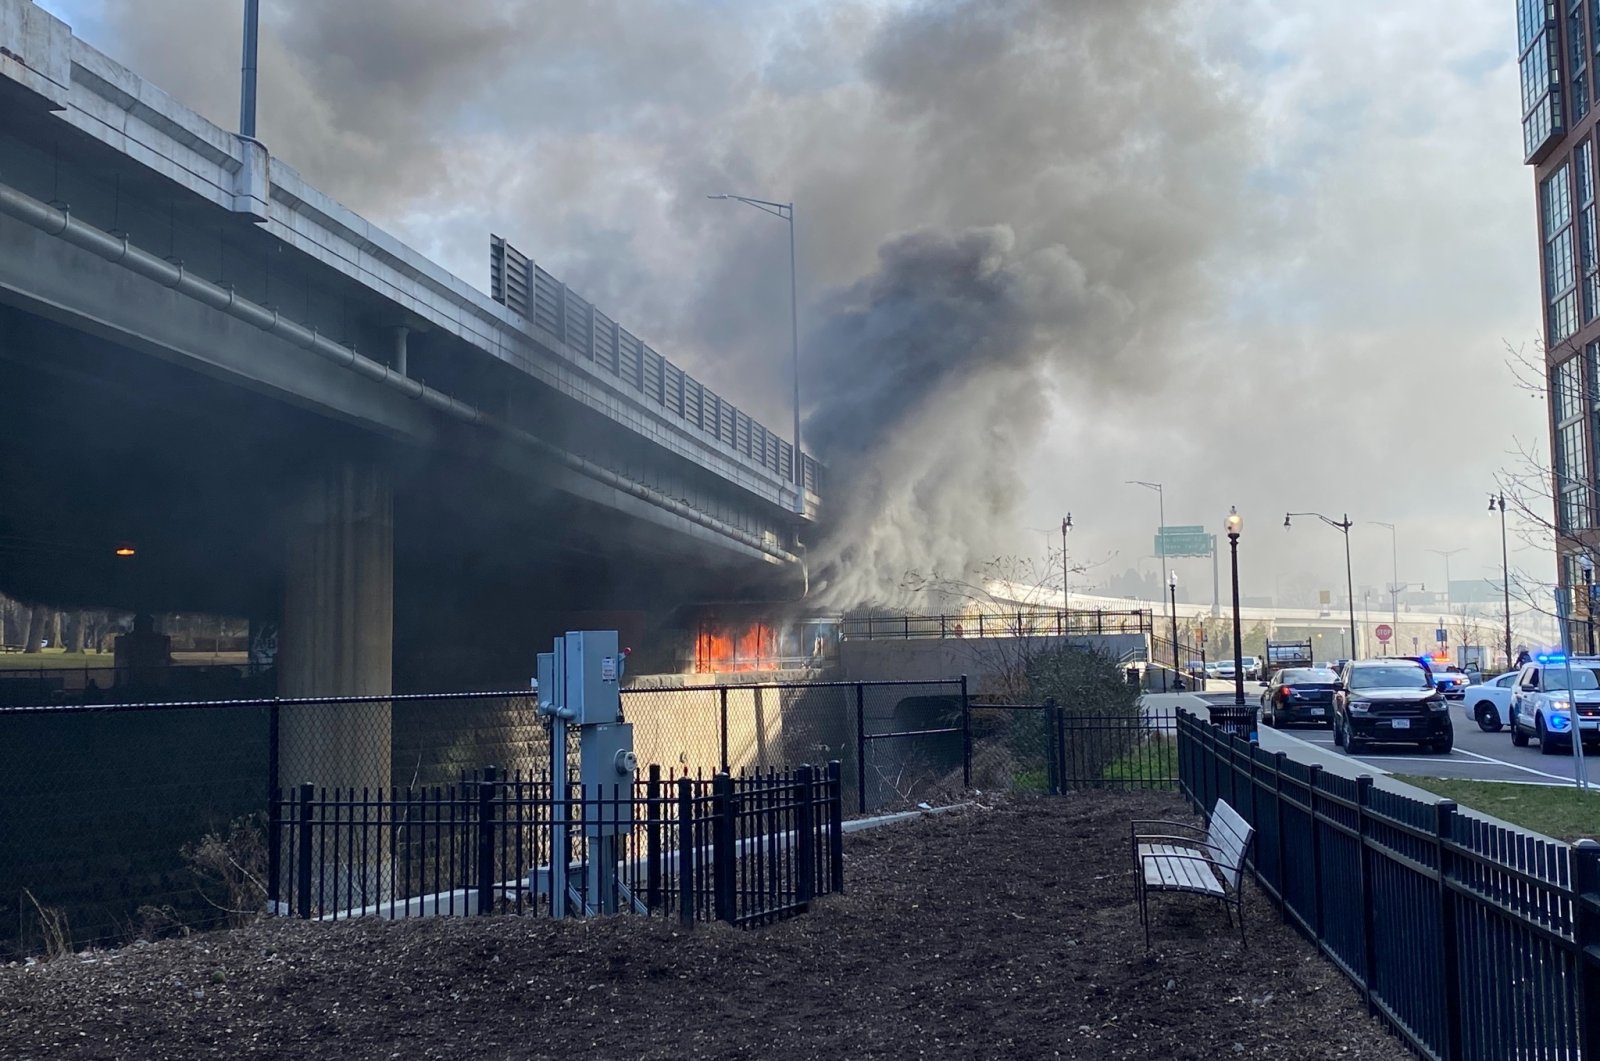 A fire burns under a bridge in Washington, D.C., U.S. on Jan. 18, 2021. (Edward Daniels via Reuters)